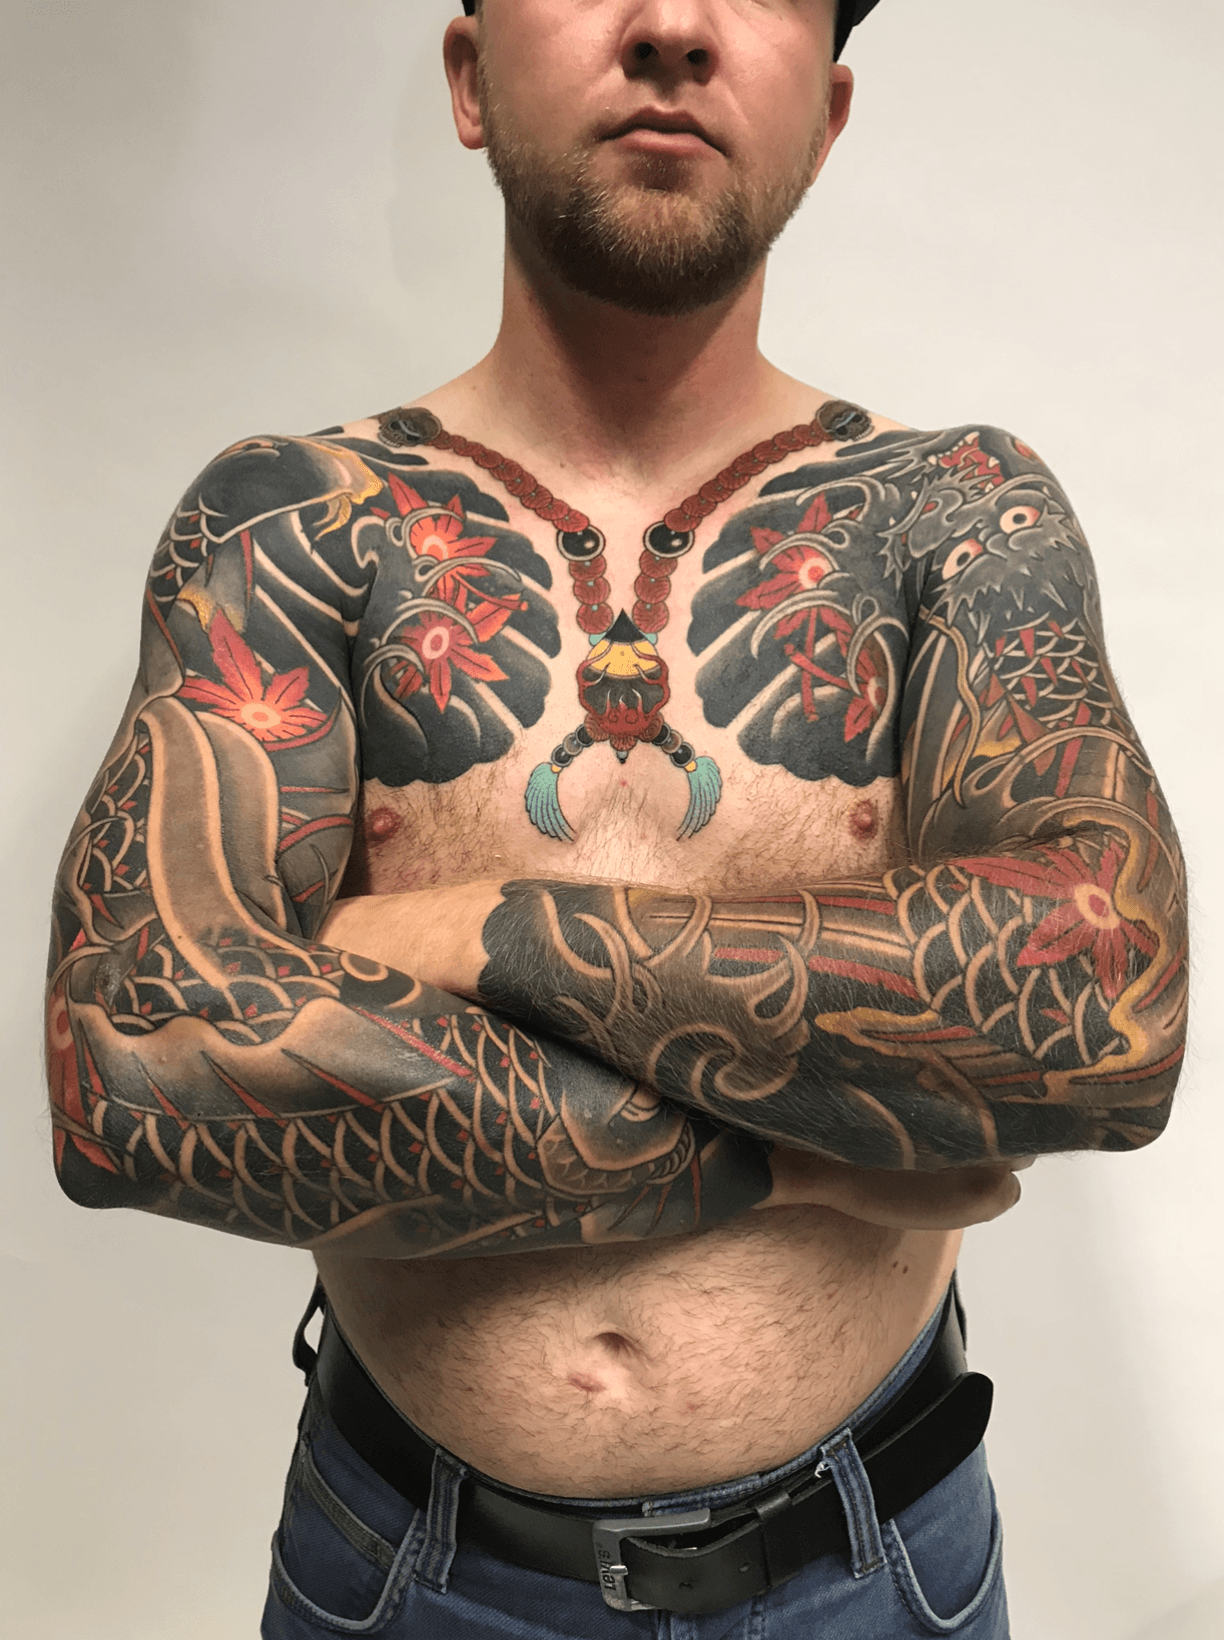 Inksearch tattoo Mateusz Kanu